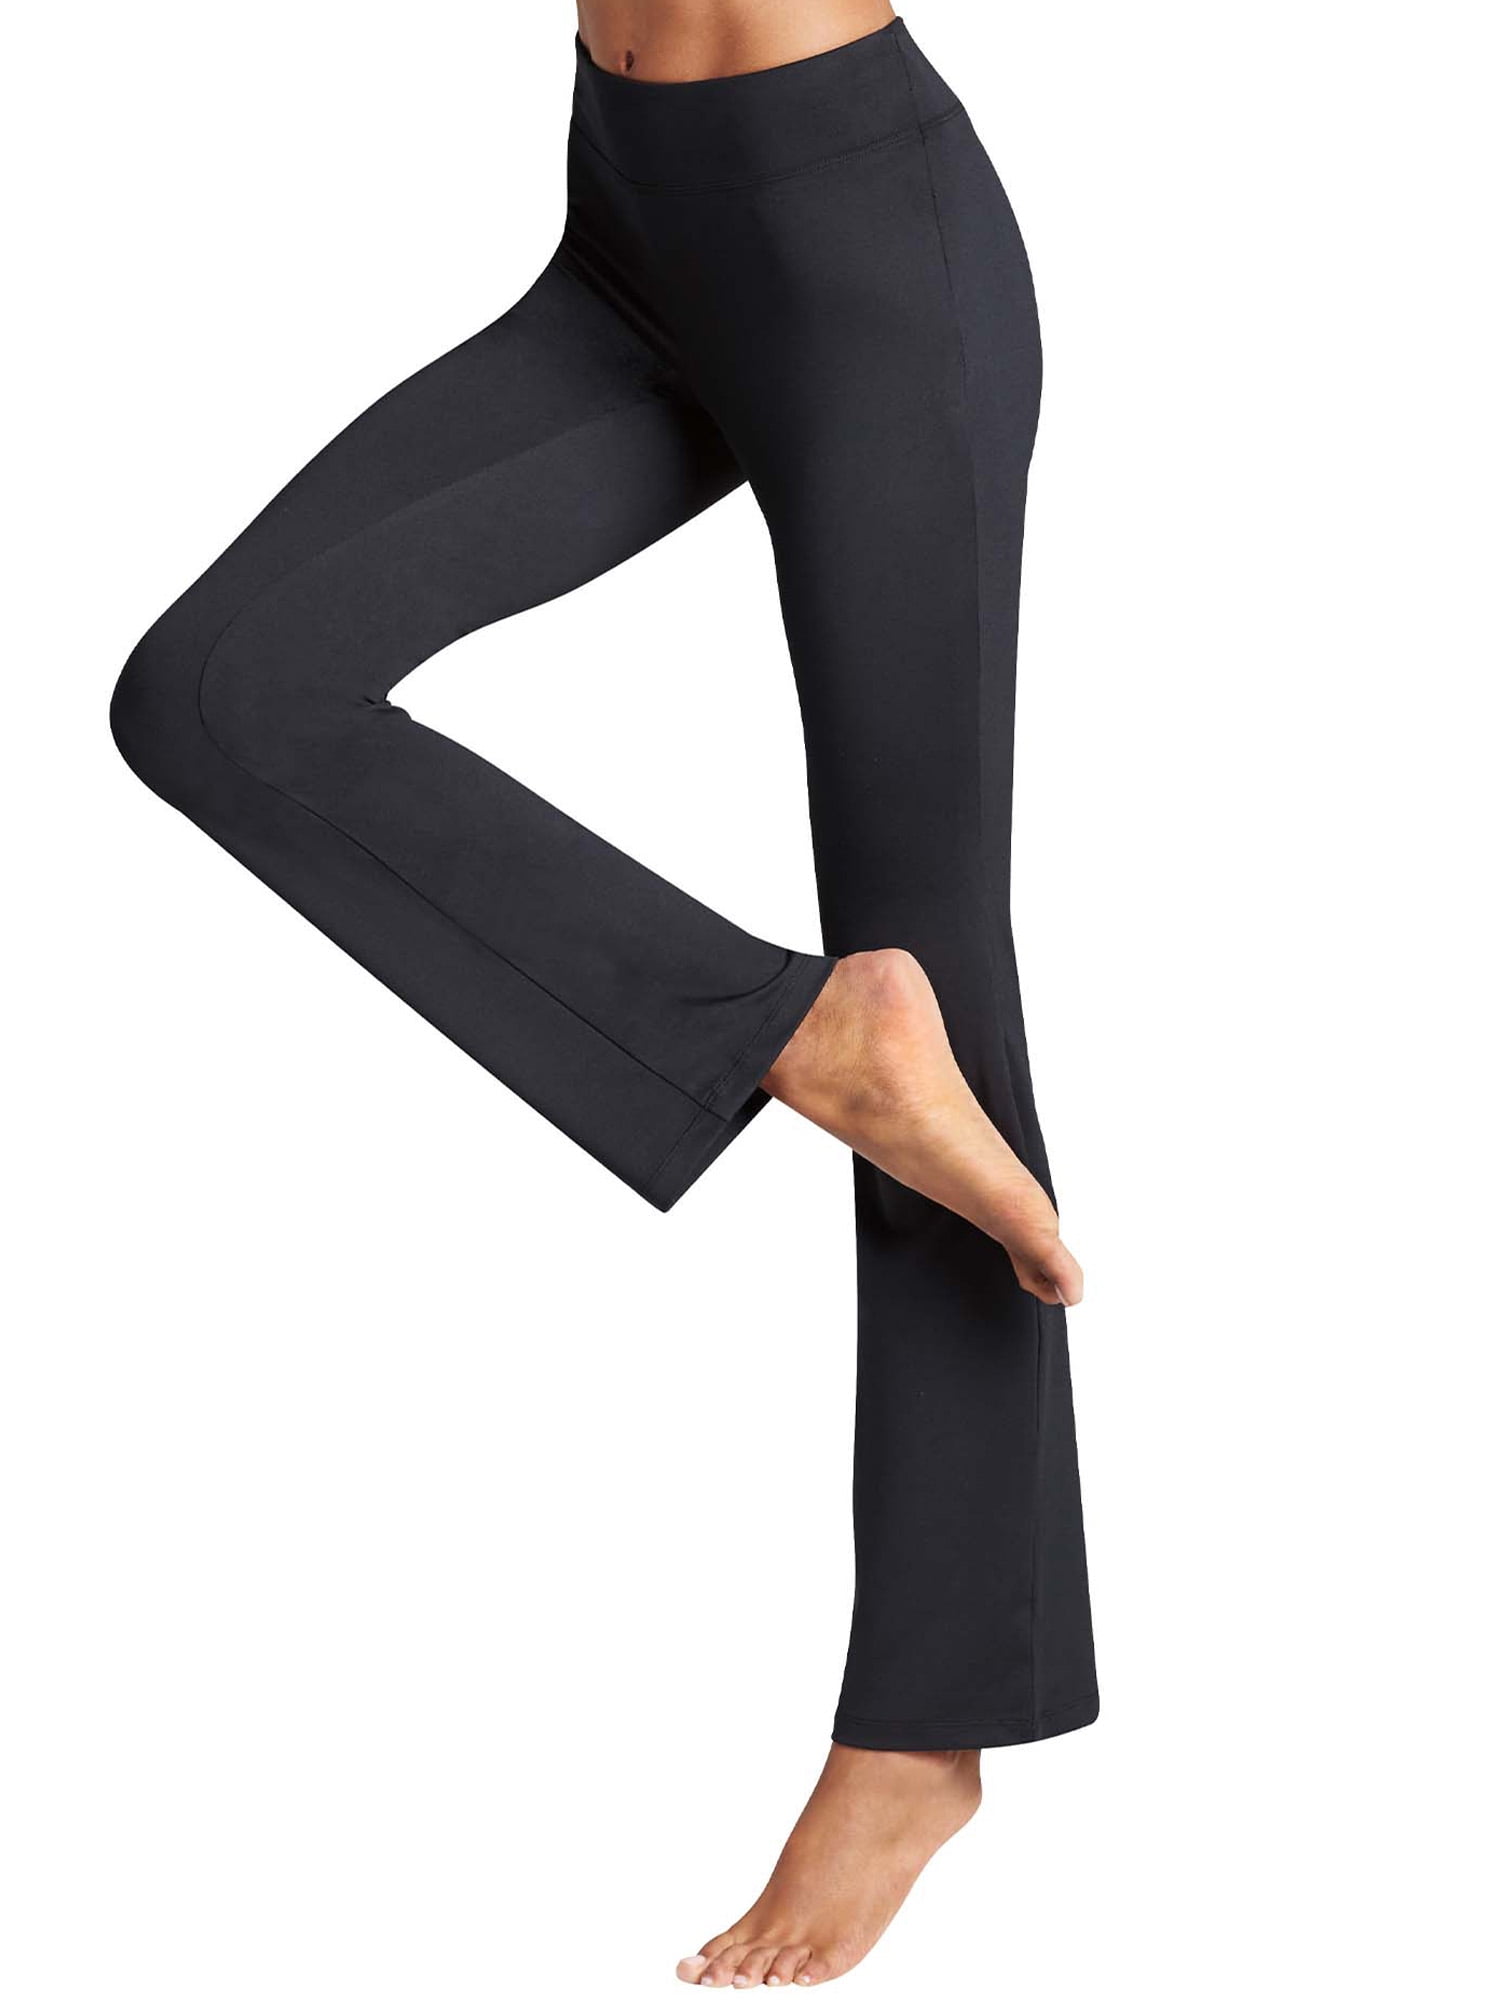 Hanes Women's X-Temp Yoga Comfy Legging